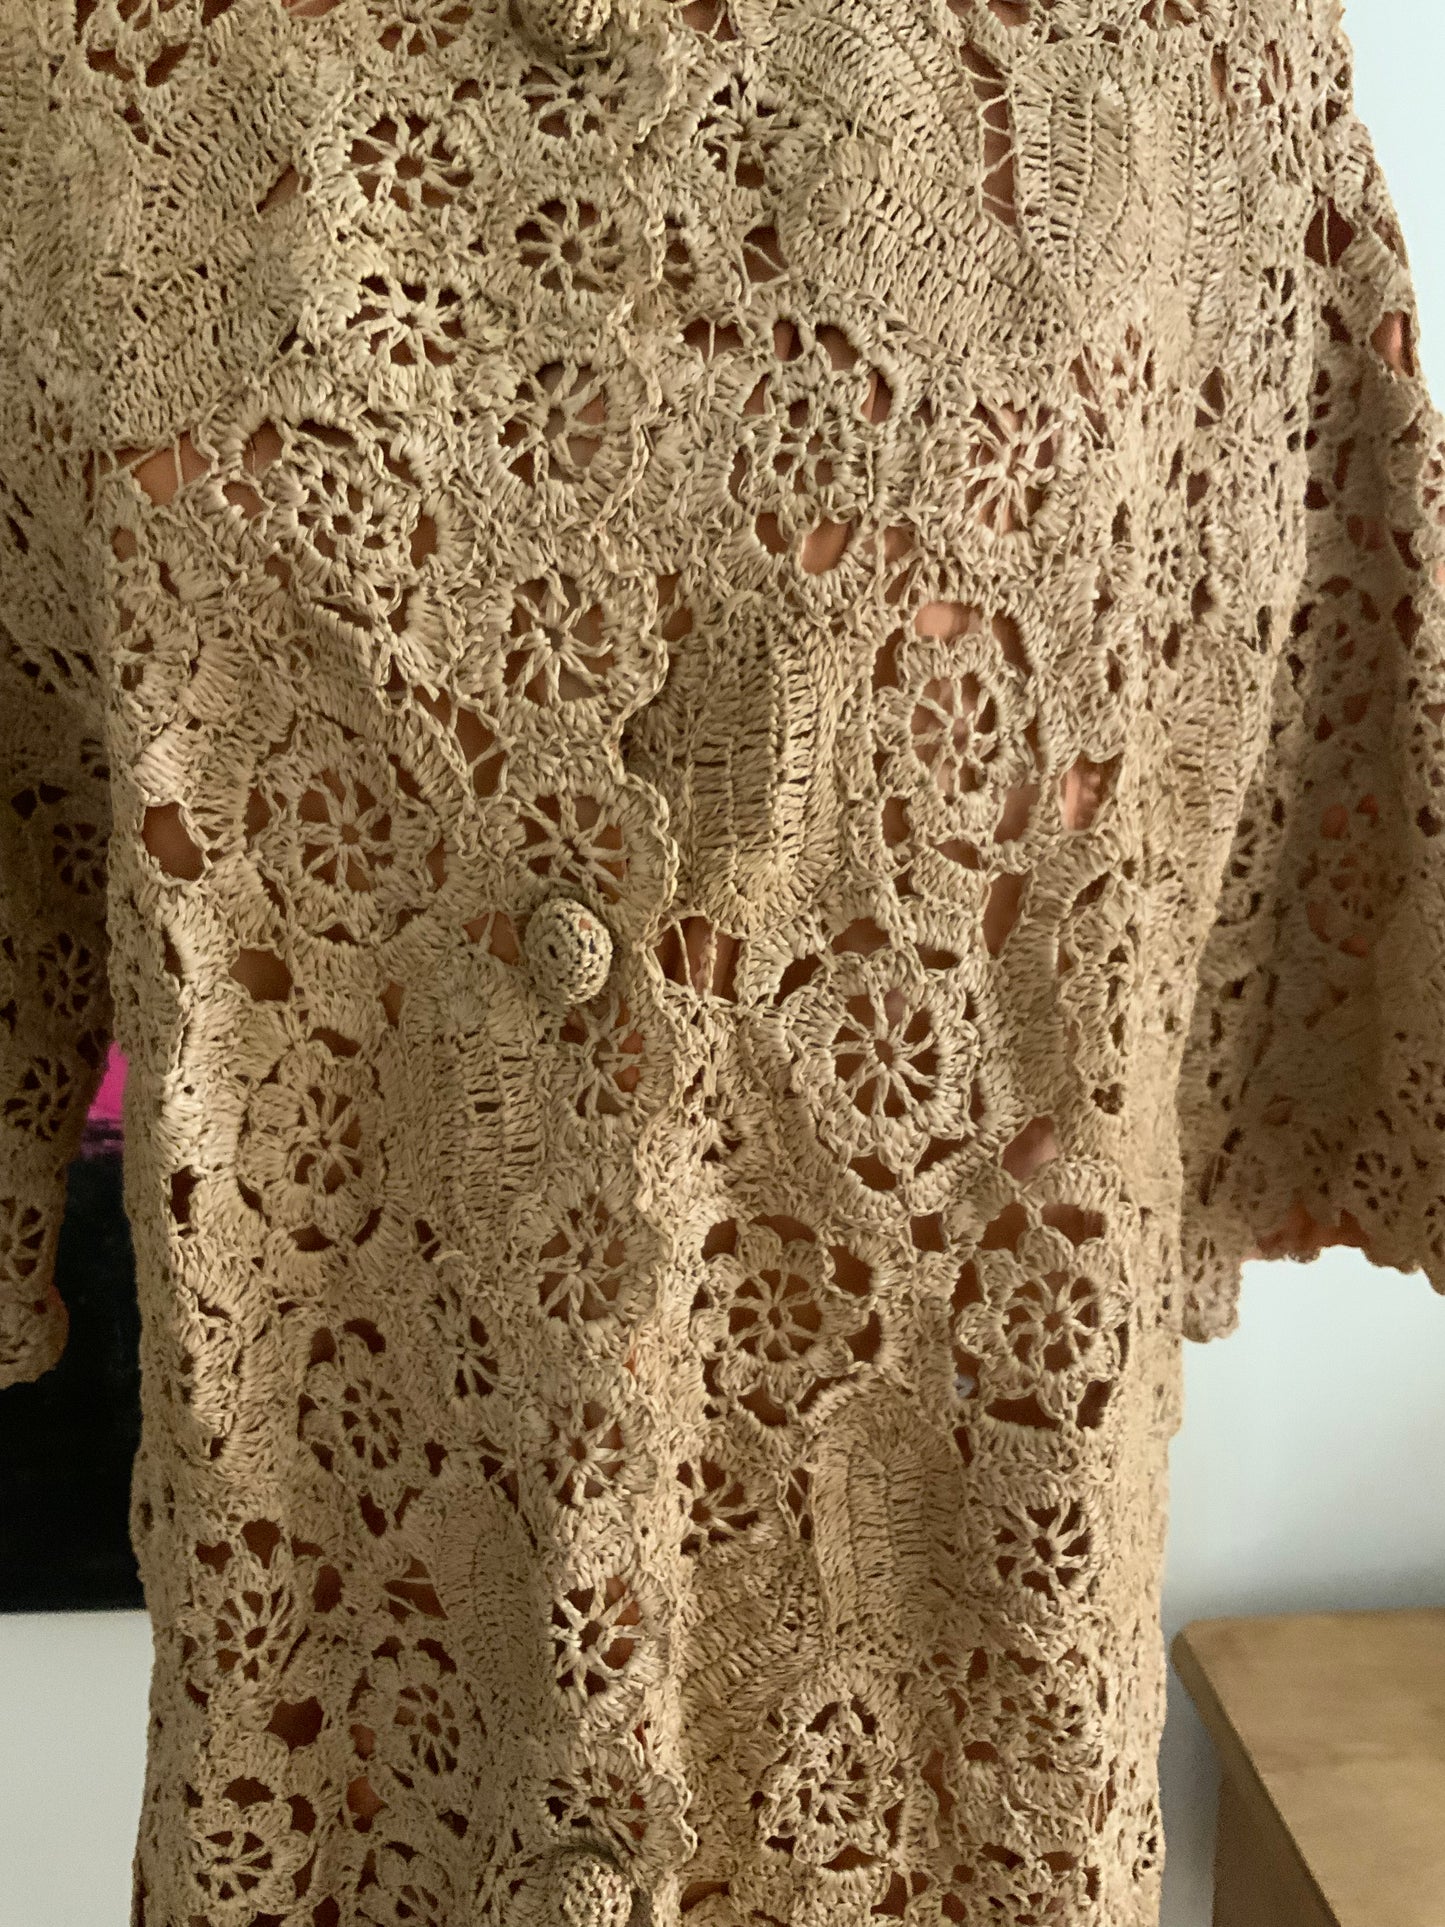 Raffia Crochet Coat - 60s